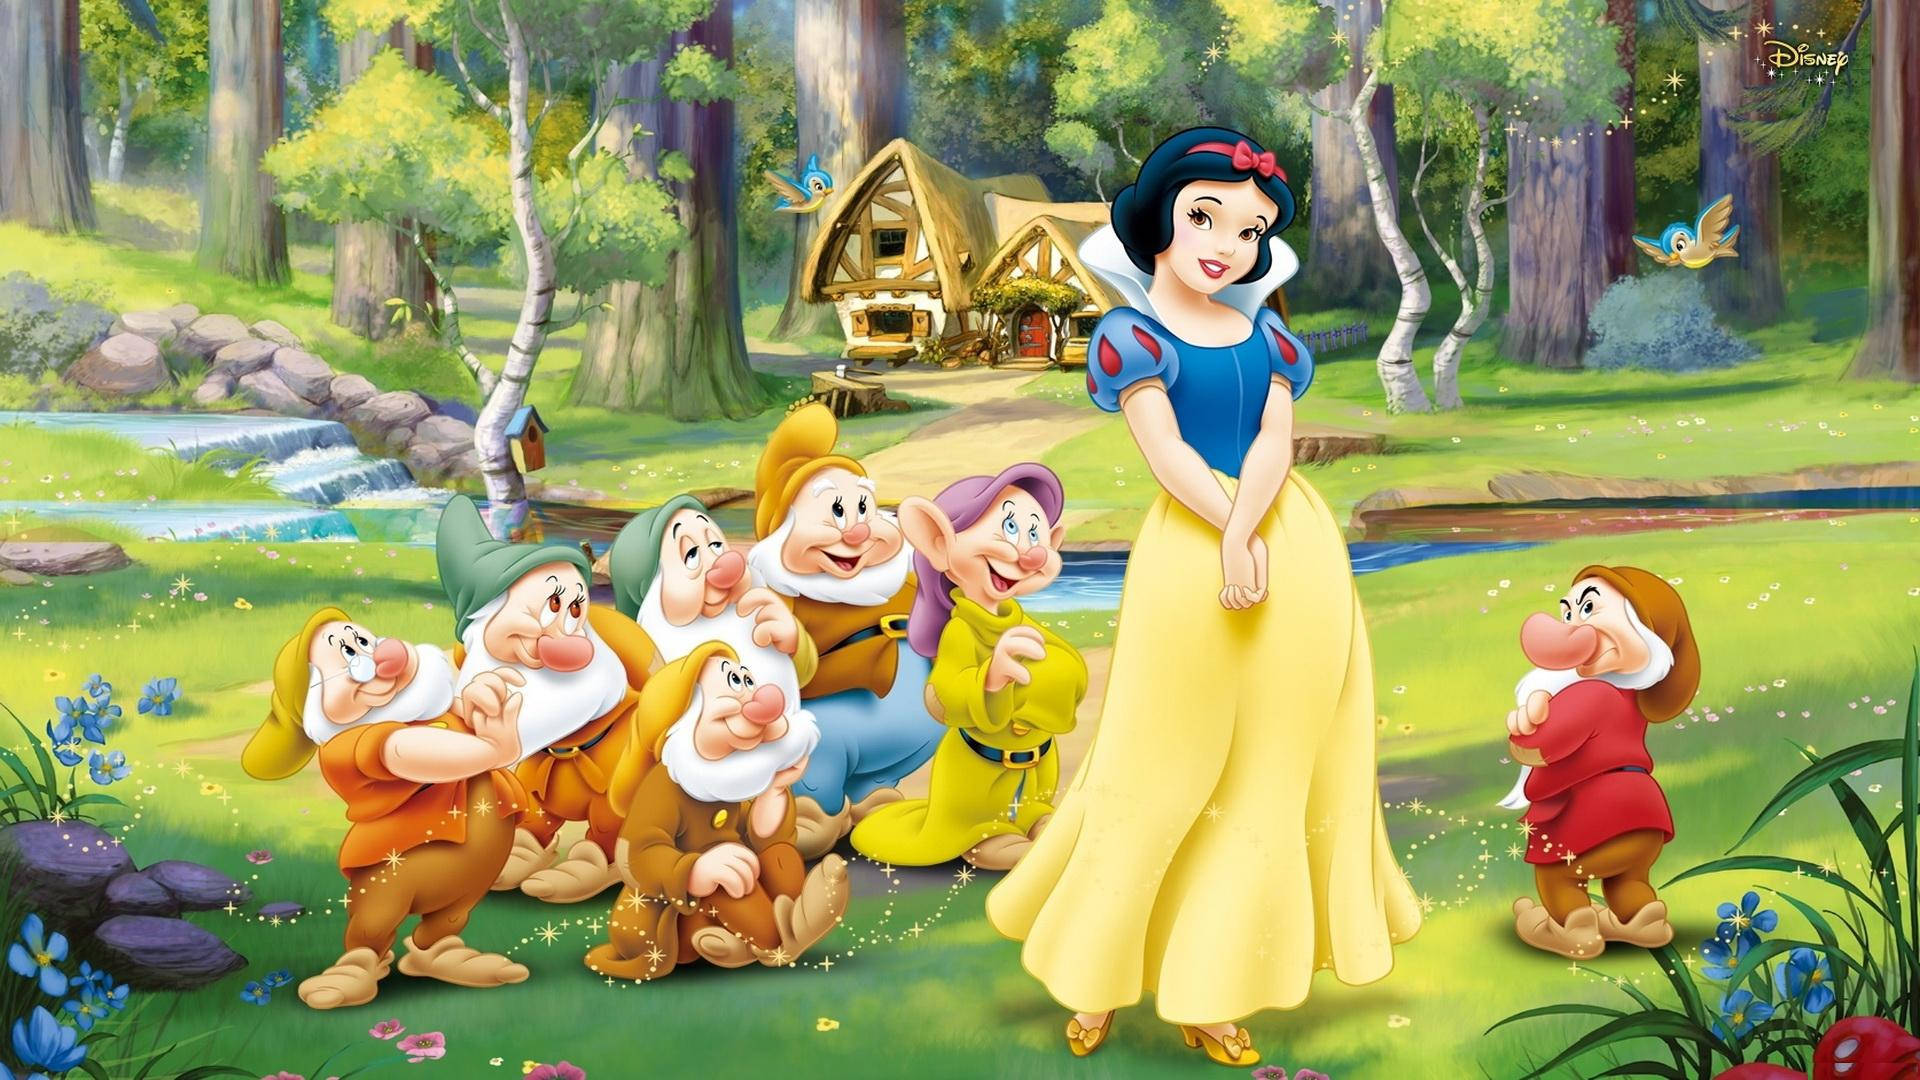 Cute Cartoon Princess Snow White Background